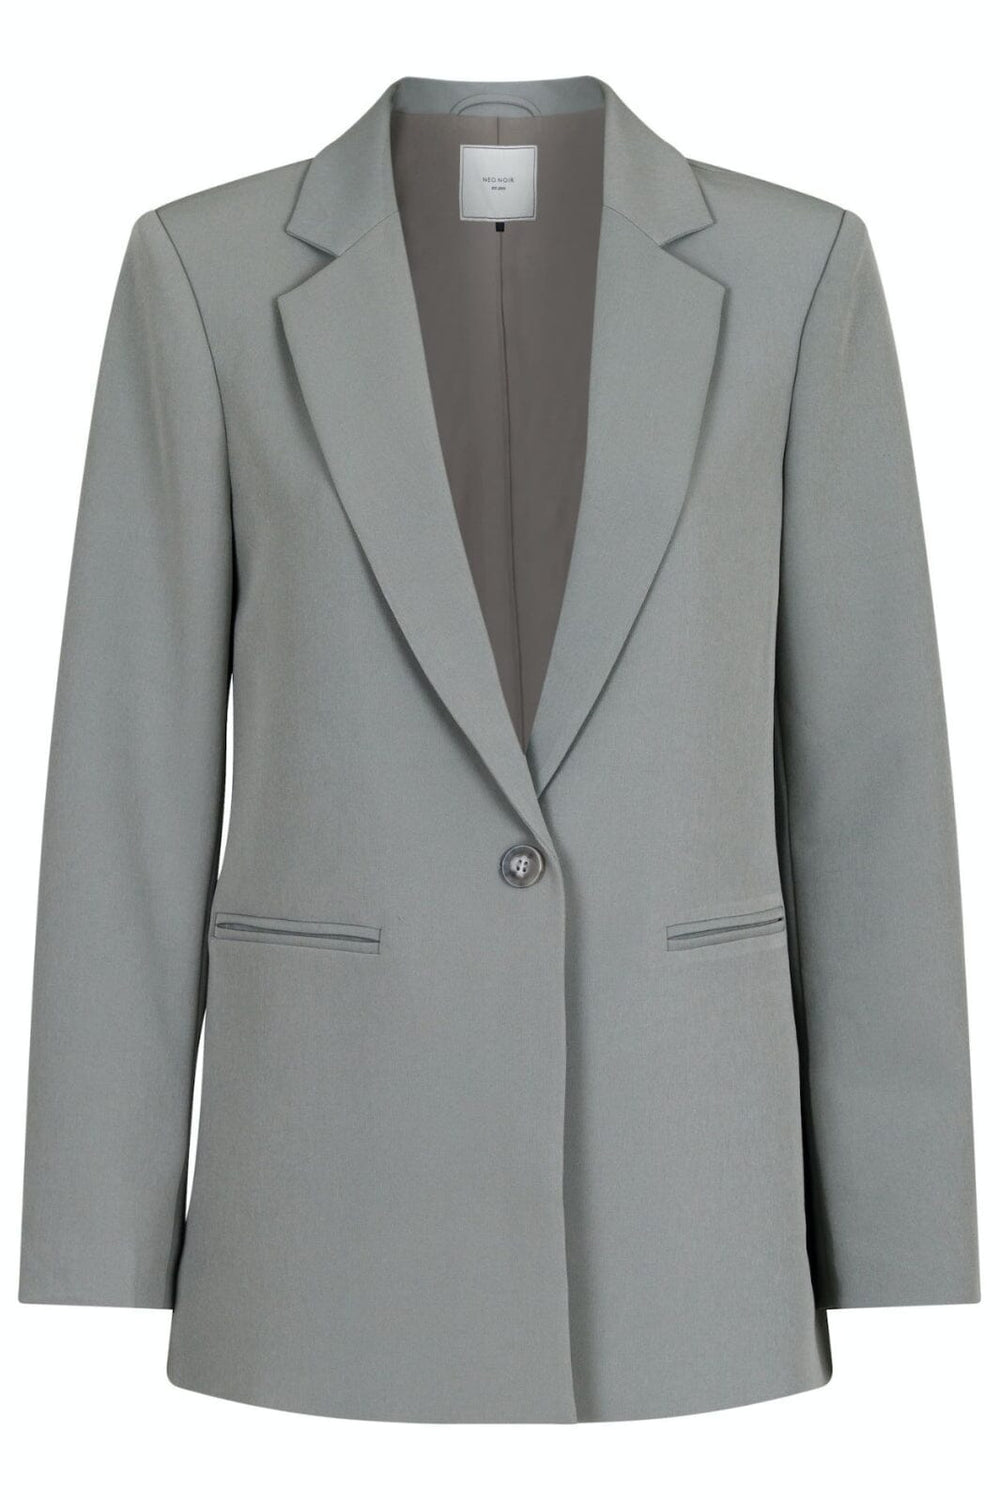 Neo Noir - Avery Suit Blazer - Smoke Green Blazere 